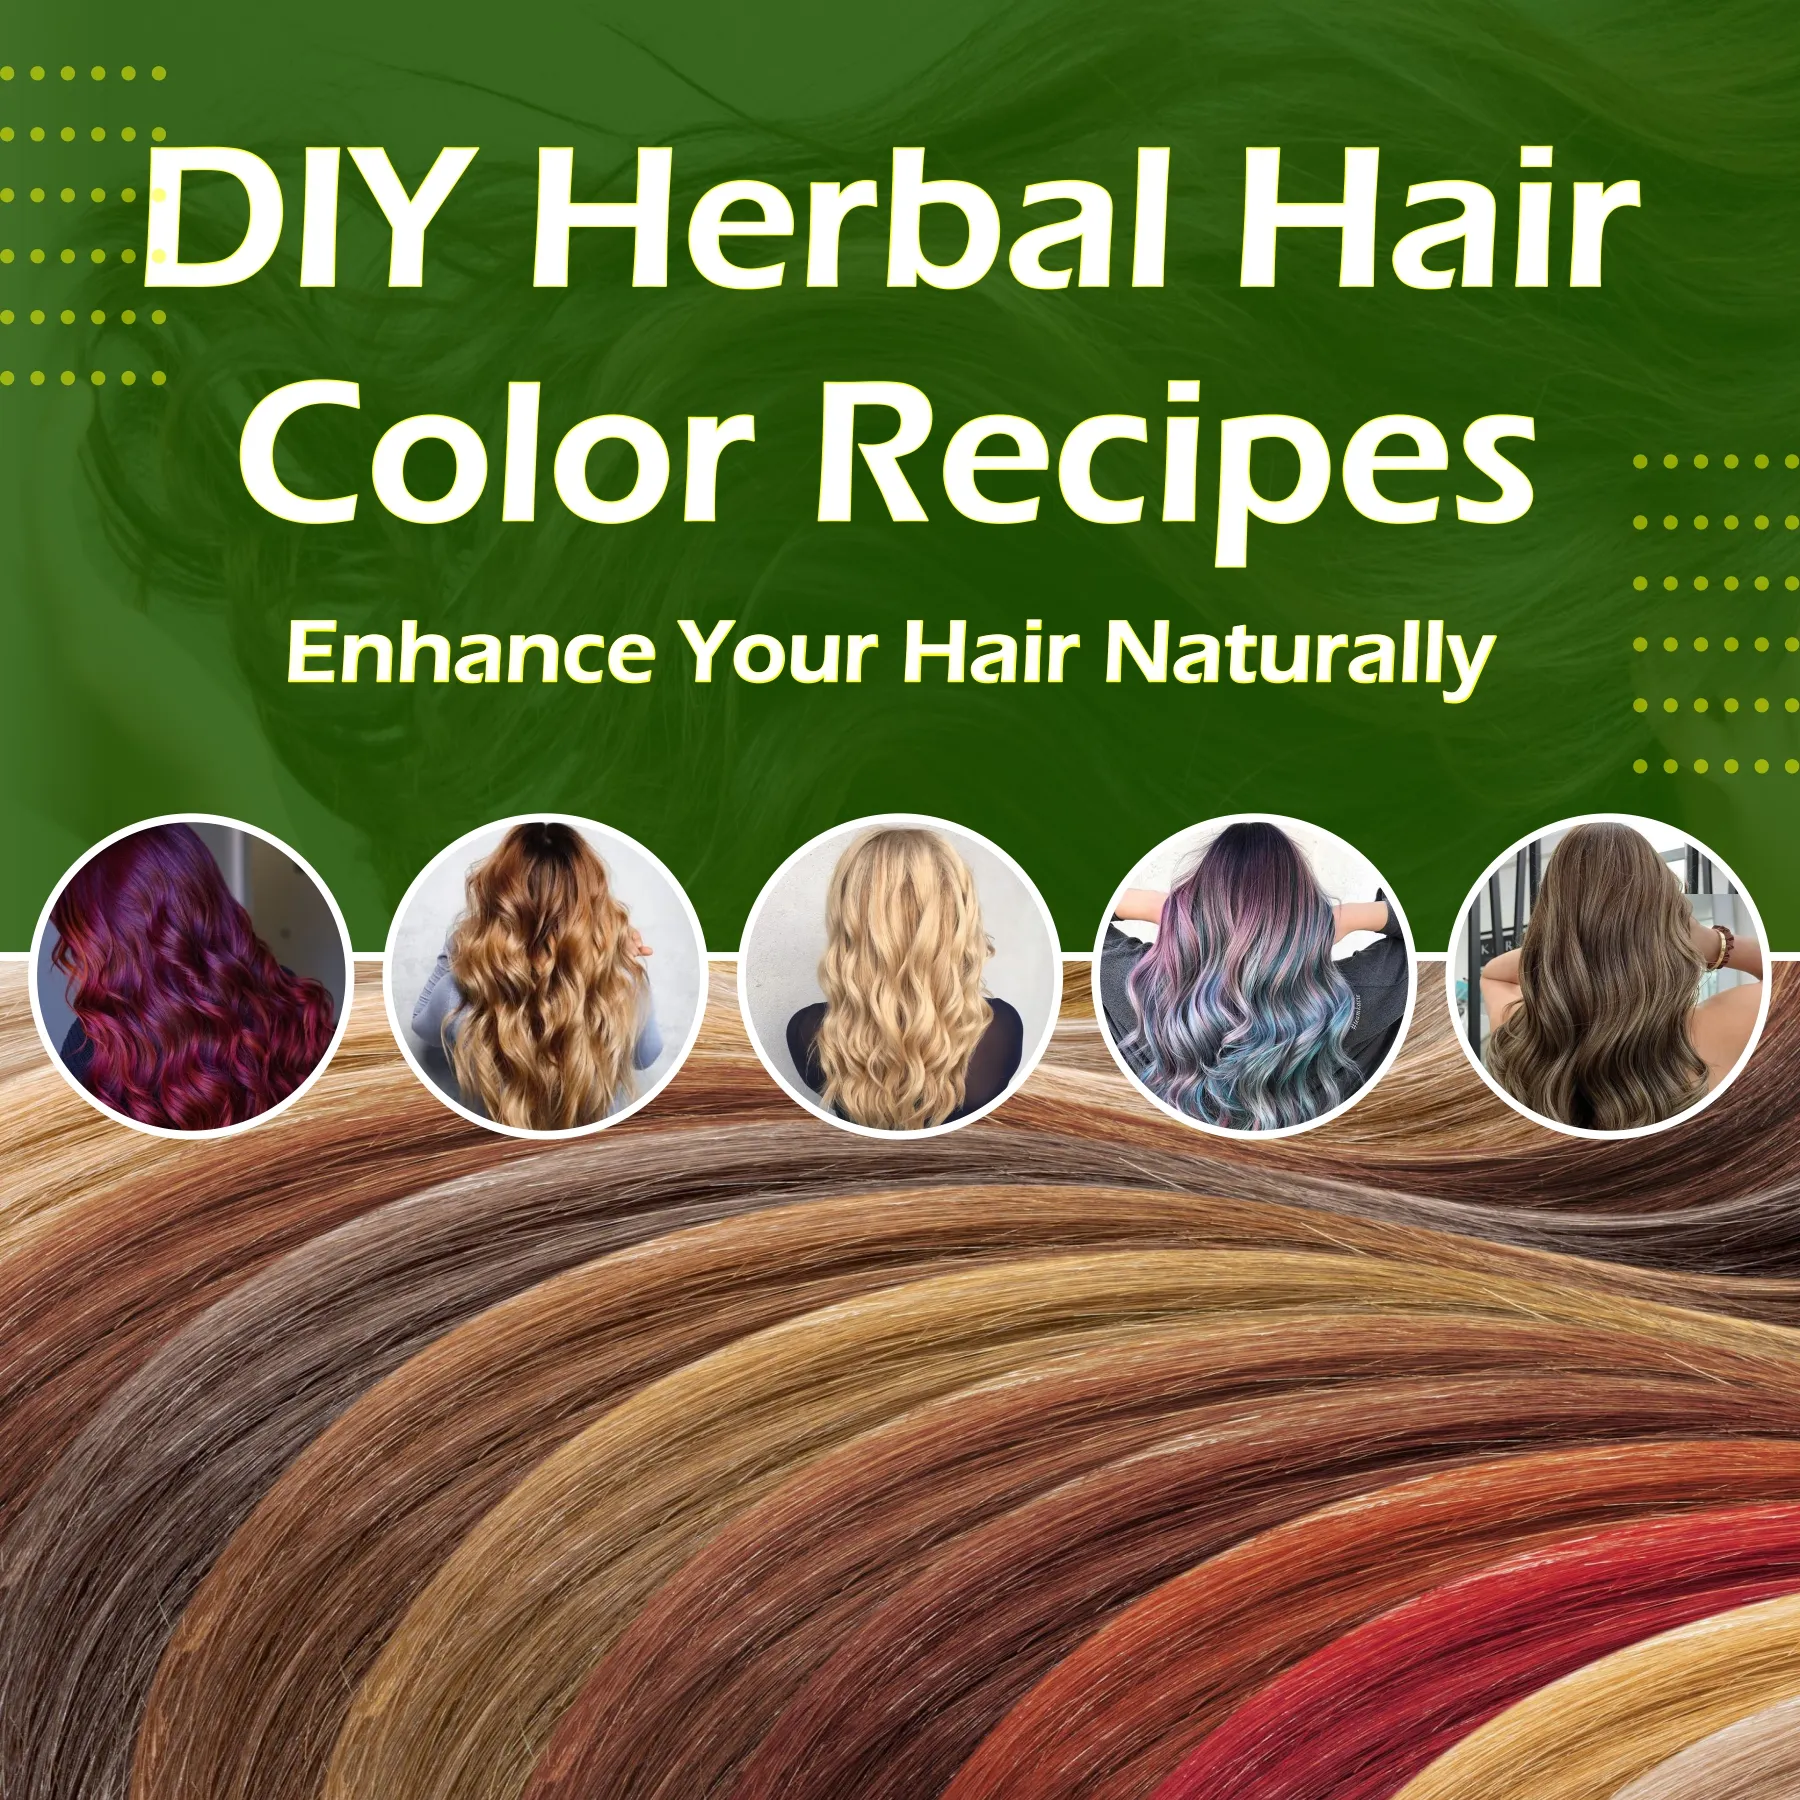 DIY Herbal Hair color recipes mobile banner - www.dkihenna.com